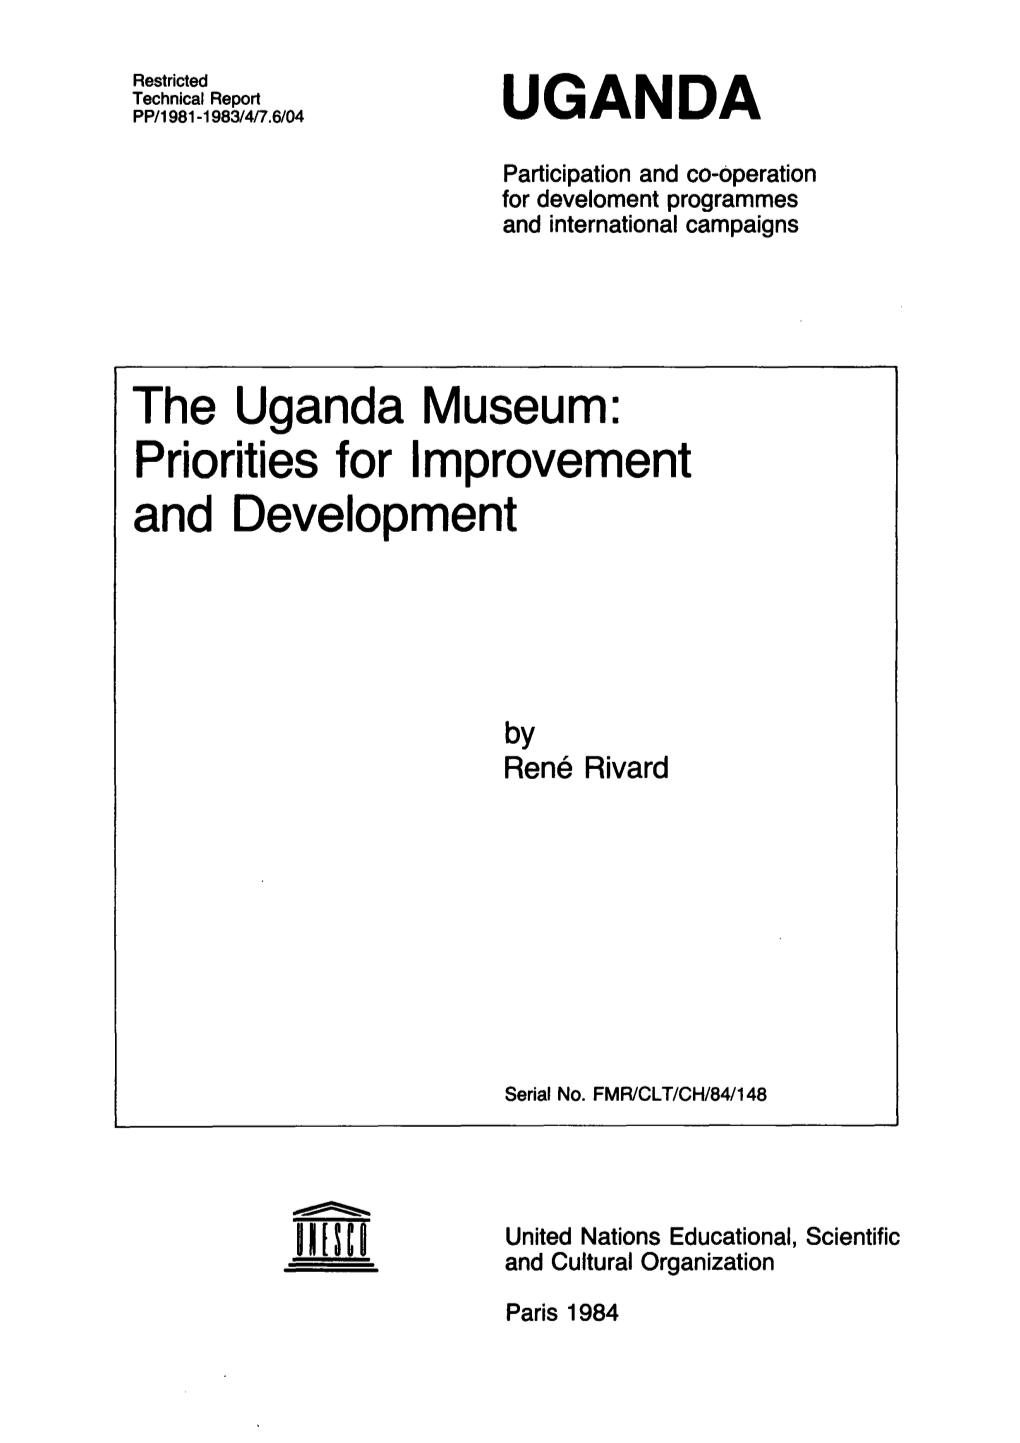 The Uganda Museum: Priorities for Improvement and Development